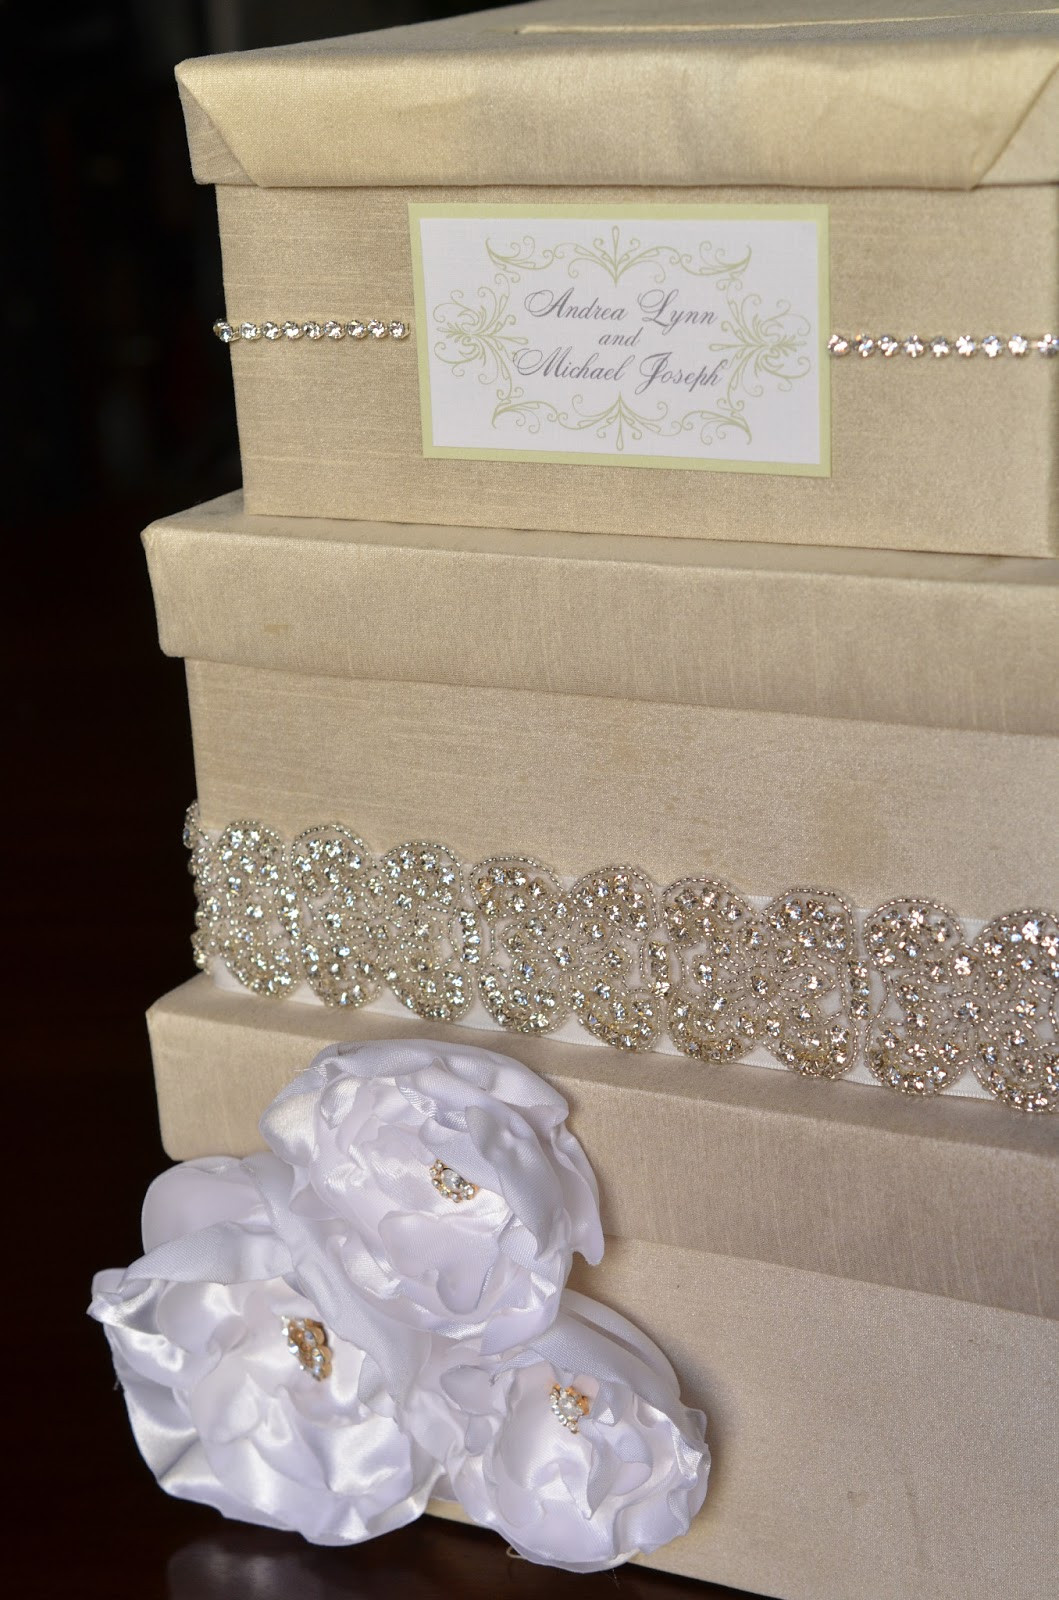 Best ideas about Wedding Card Box DIY
. Save or Pin DIY Wedding Card Box Tutorial Andrea Lynn HANDMADE Now.